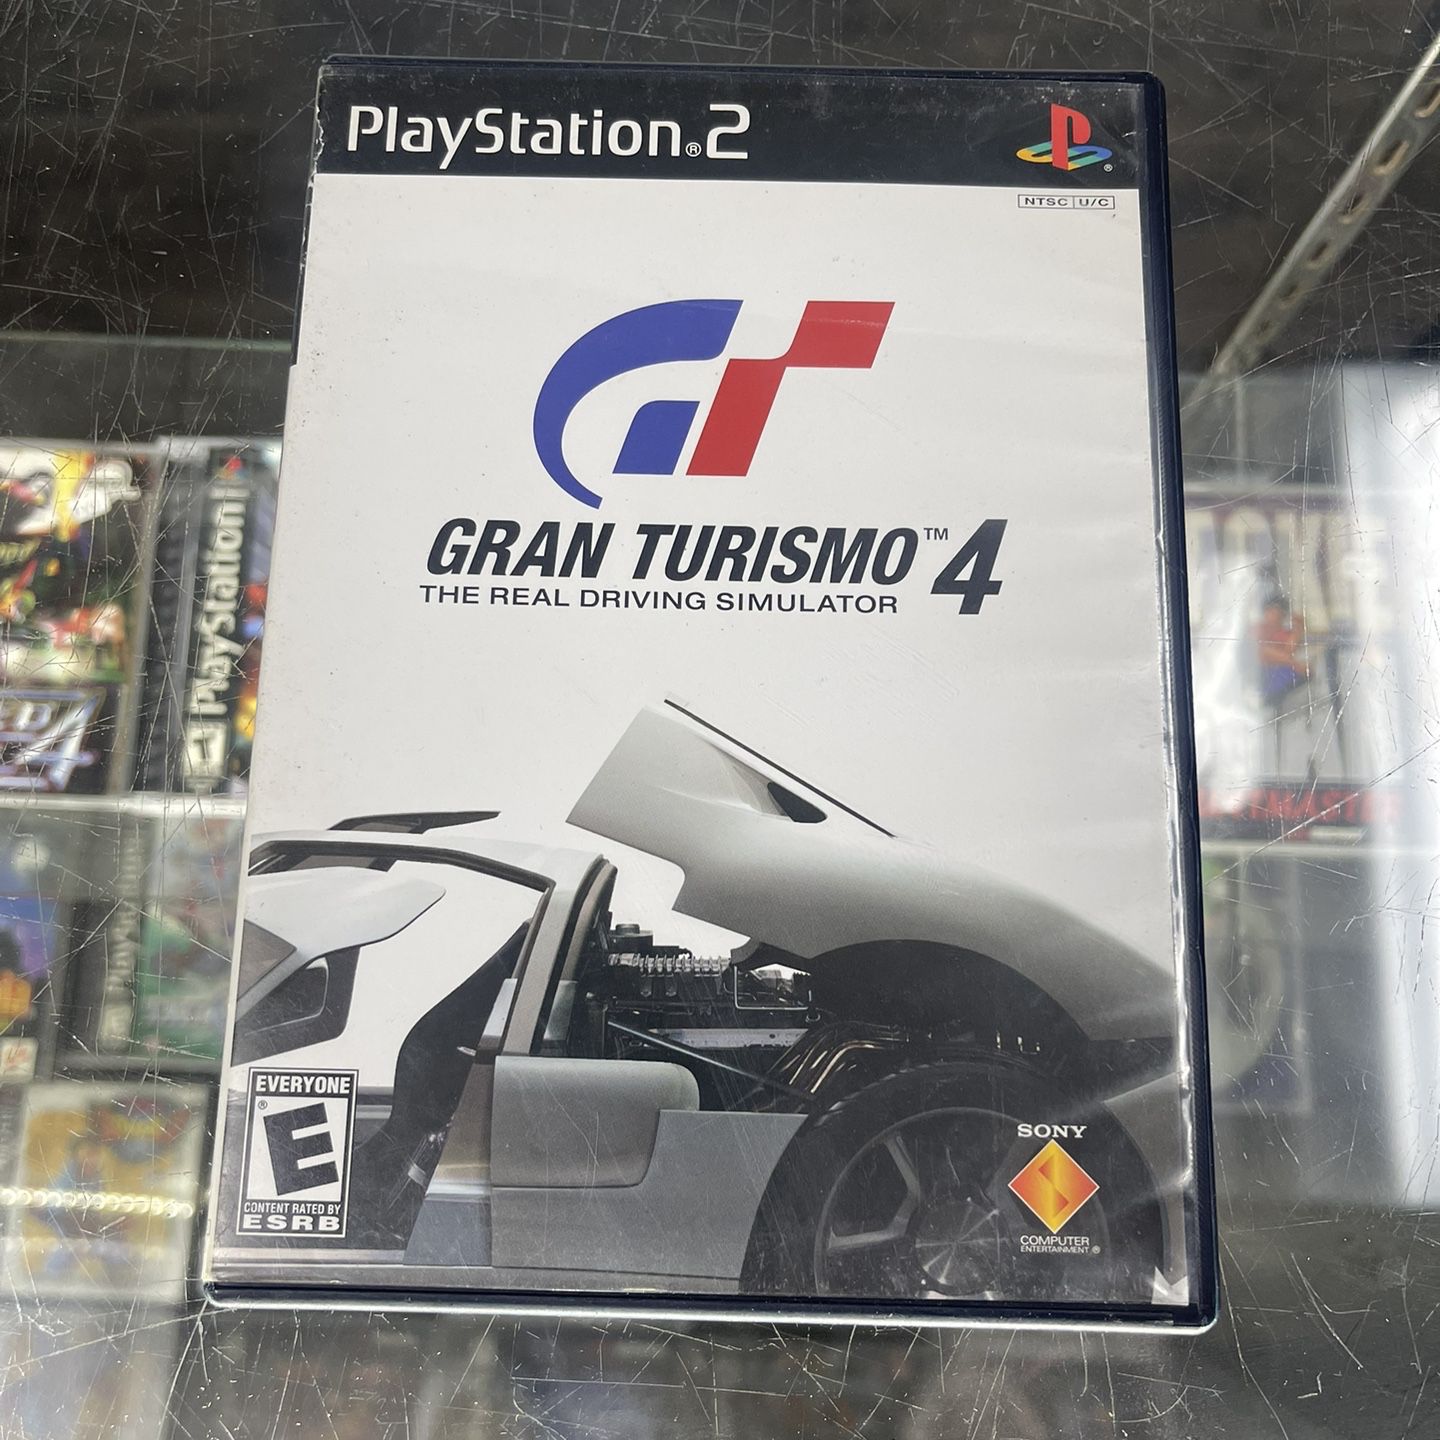 Gran Turismo 4 Ps2 $20 Gamehogs 11am-7pm